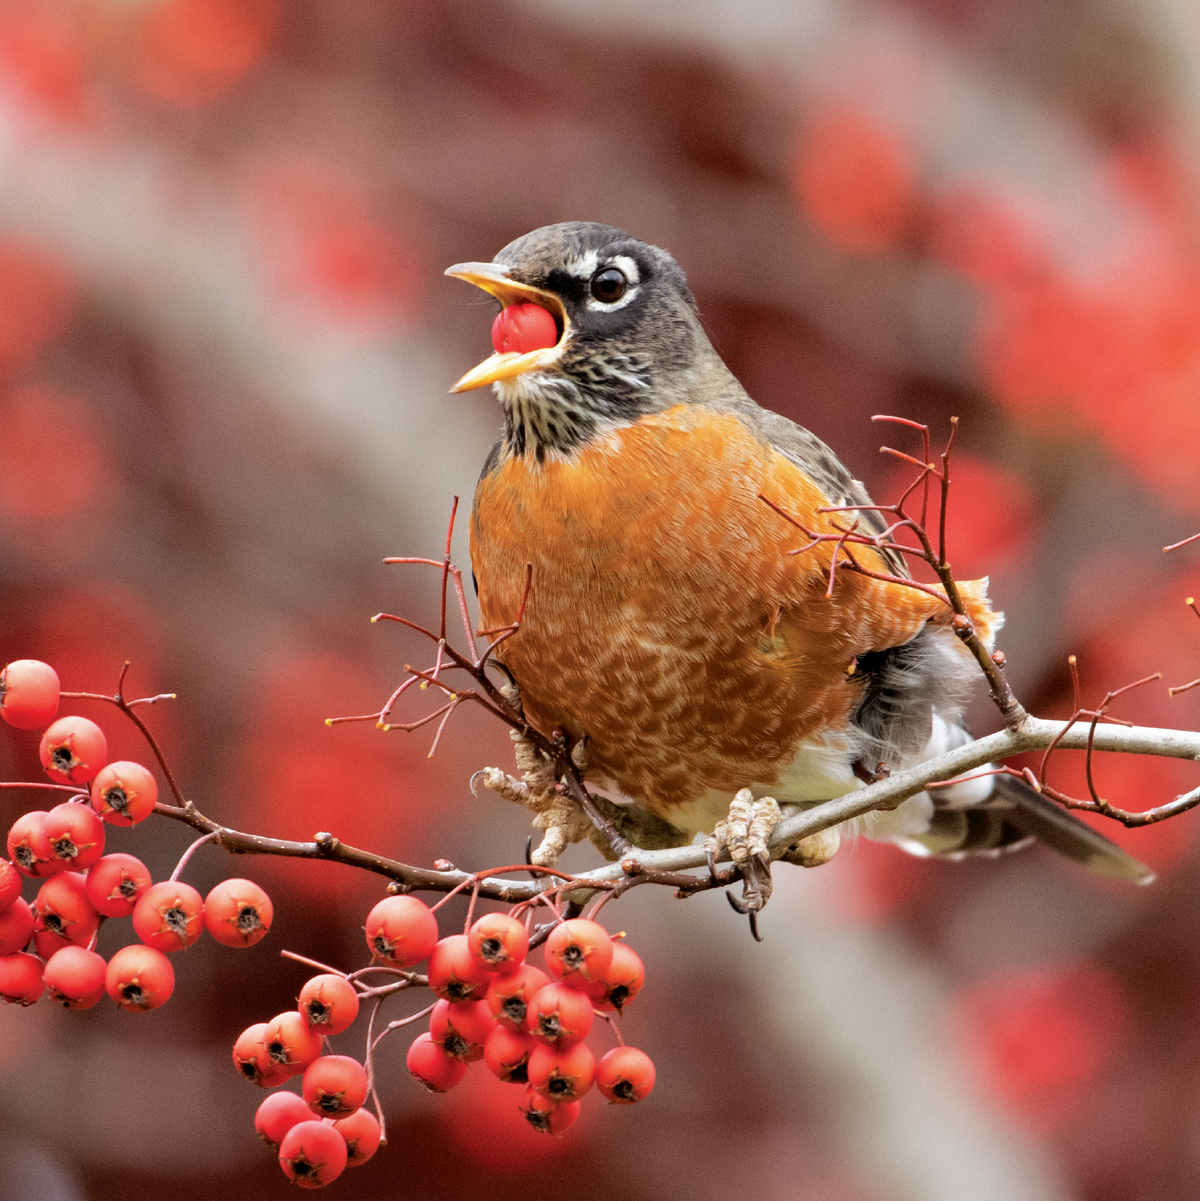 An American robin feasting on berries.